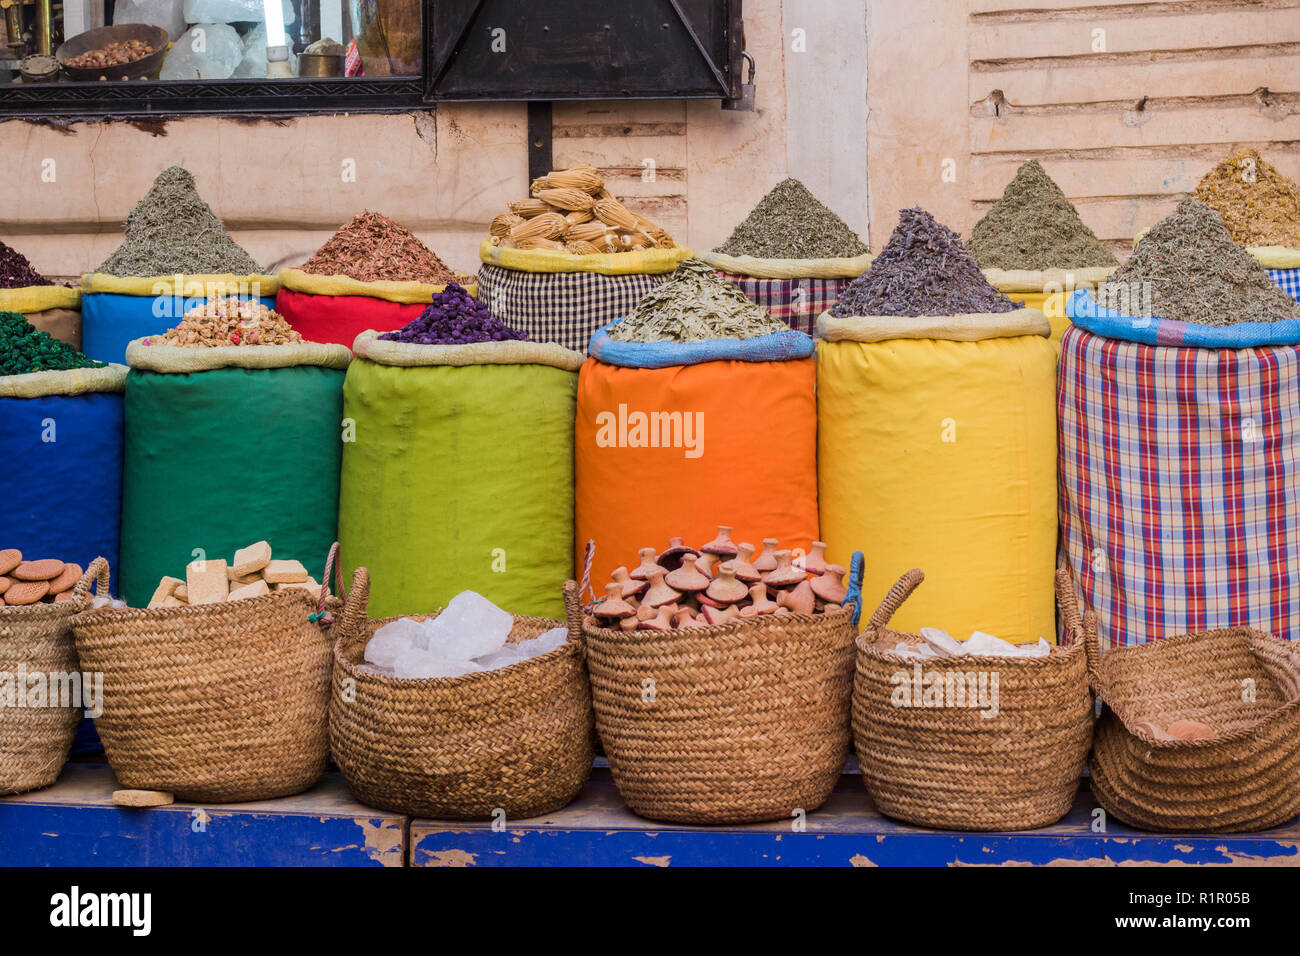 Gewürze, Marrakesch, Marokko Stockfotografie - Alamy